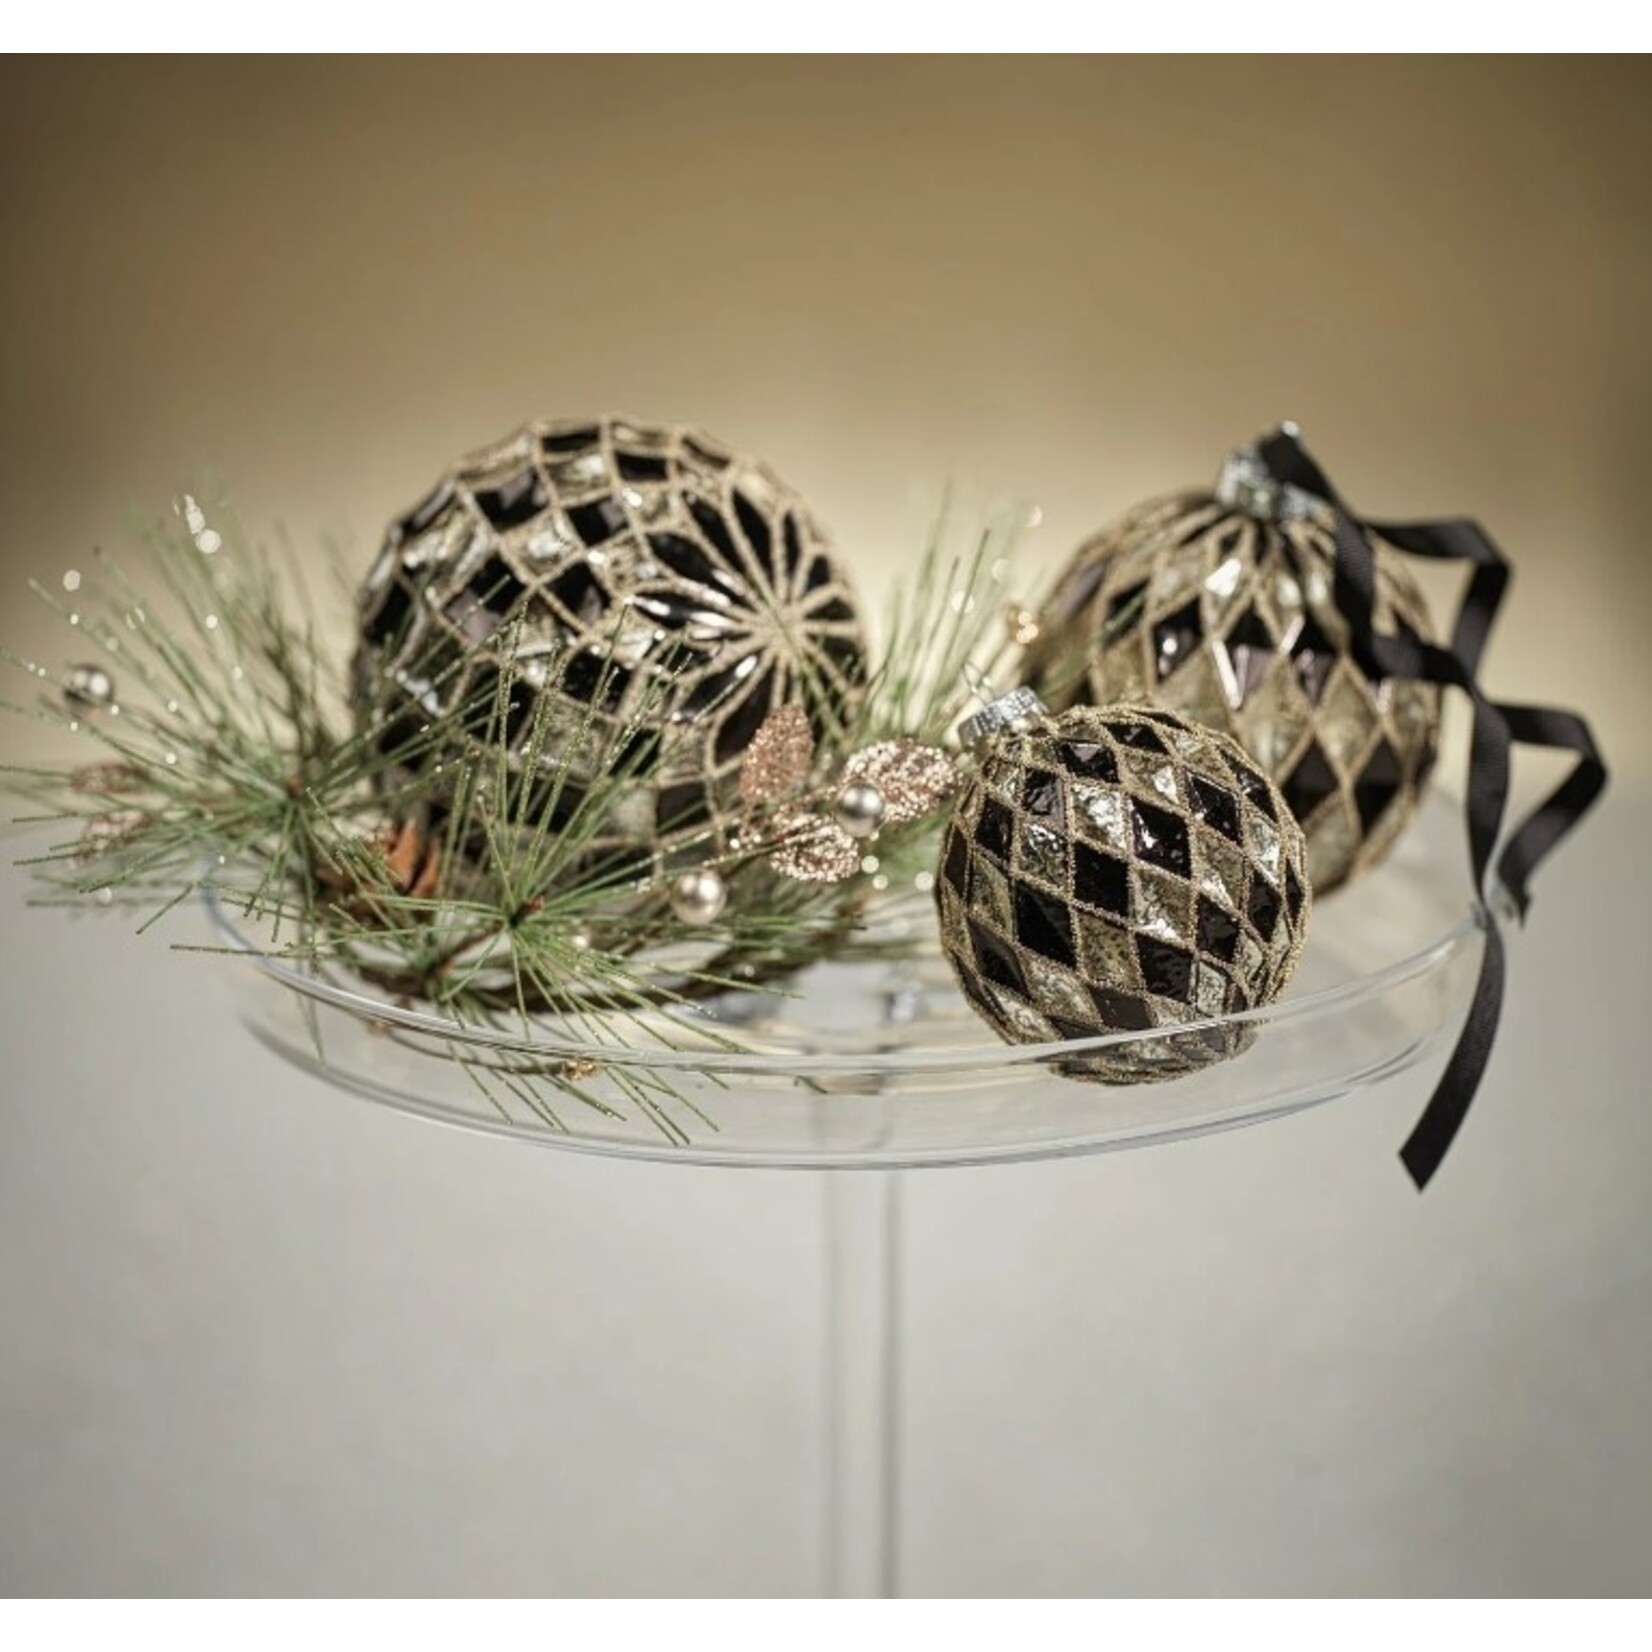 Zodax Harlequin Silver and Black Glass Ornament 4"